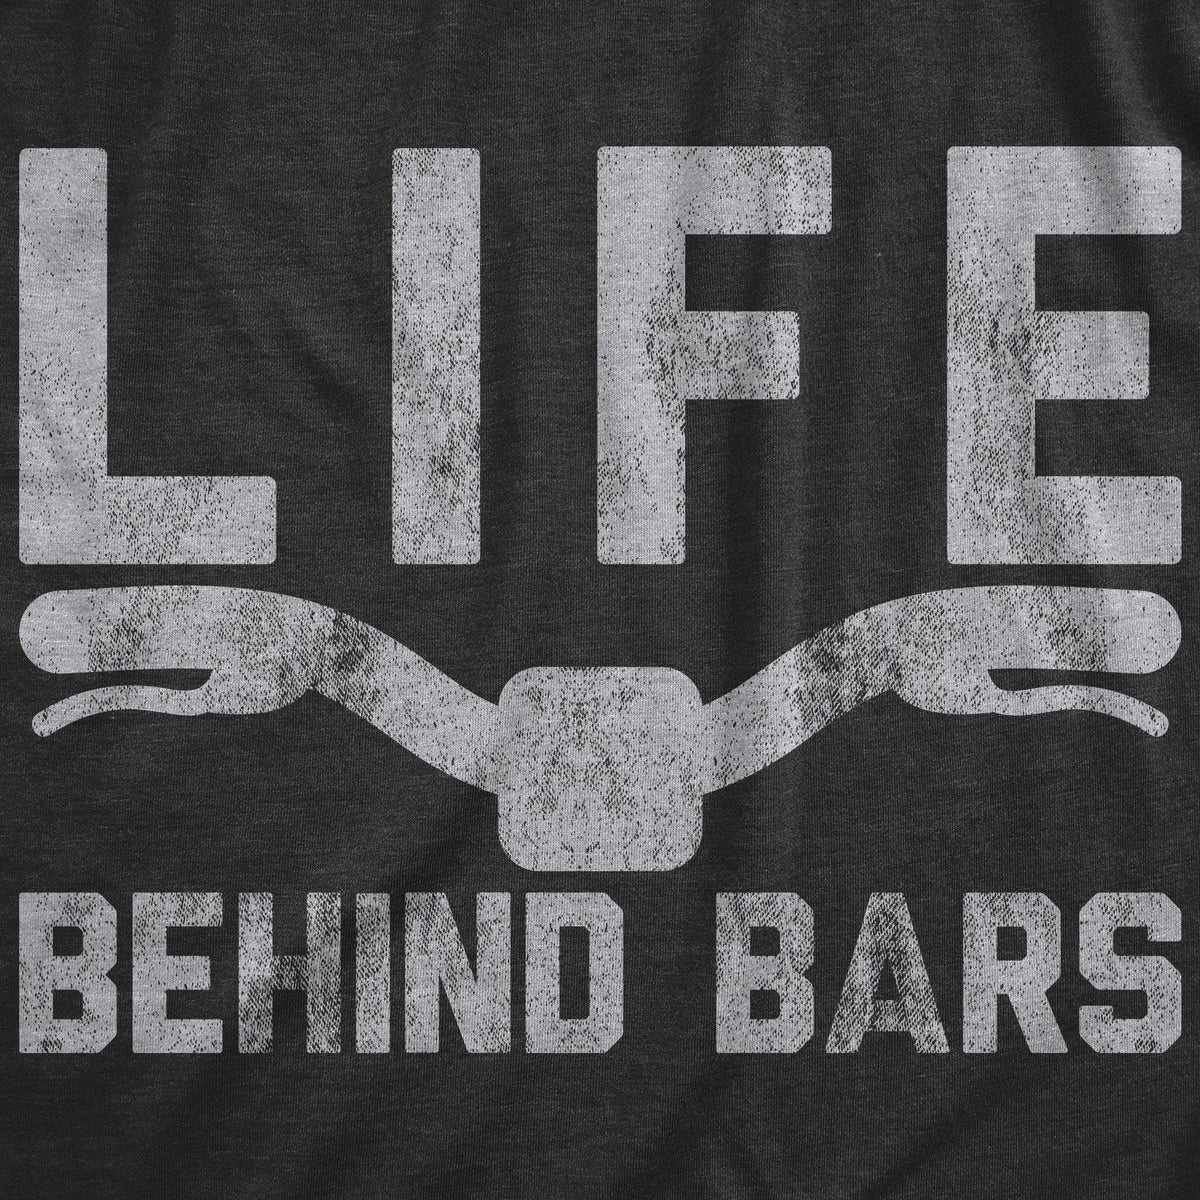 Life Behind Bars Men&#39;s Tshirt - Crazy Dog T-Shirts